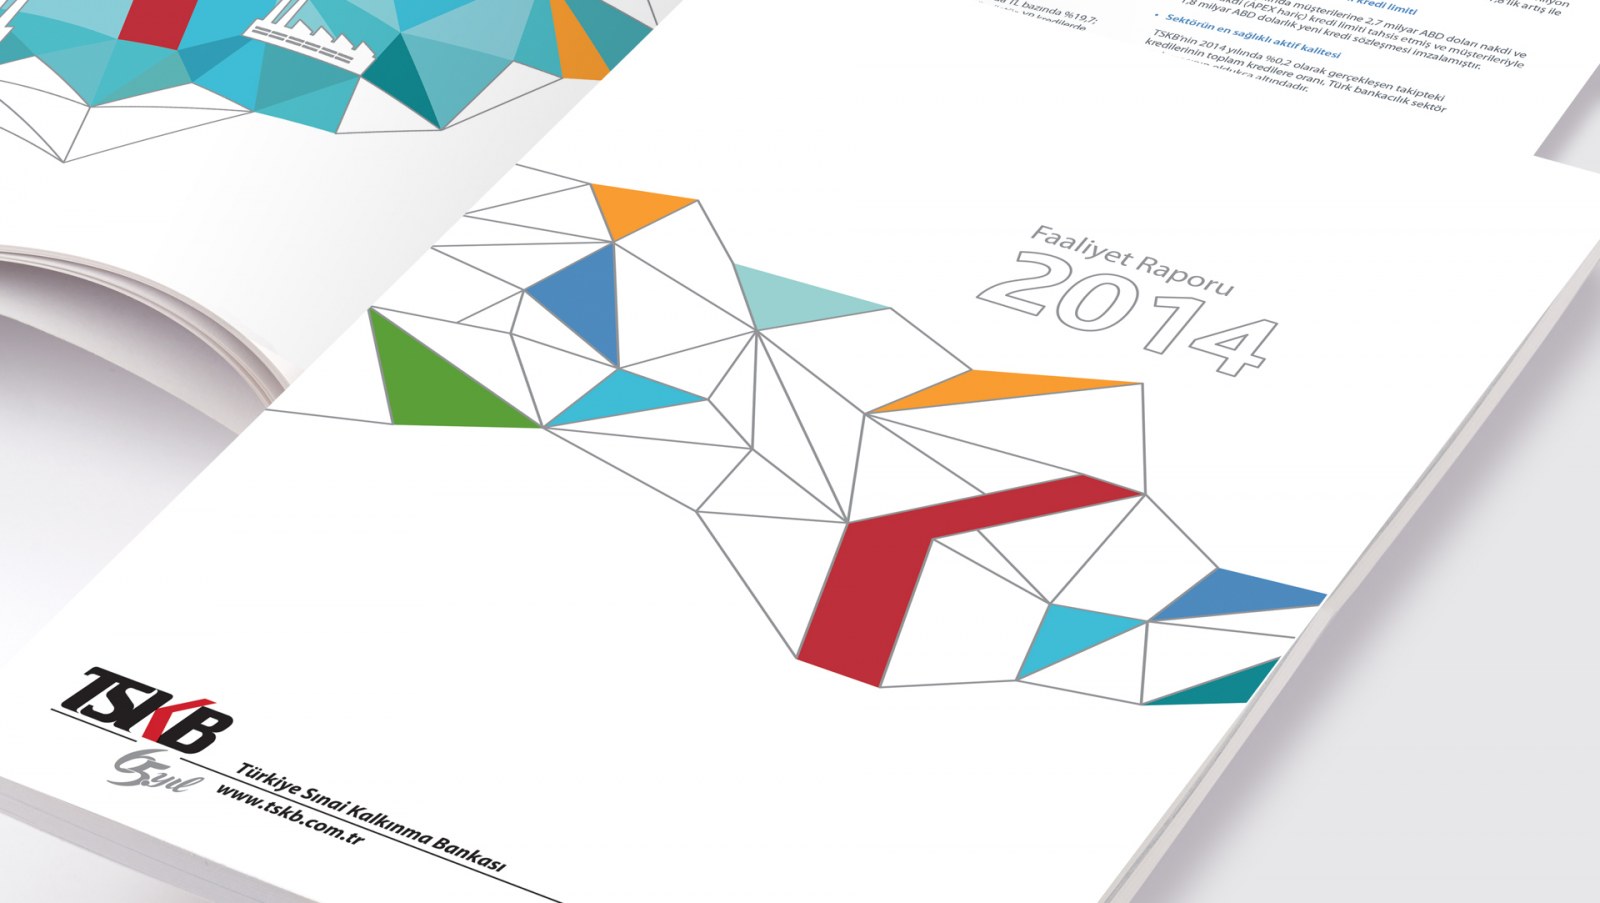 TSKB / 2014 Faaliyet Raporu / 2014 Annual Report